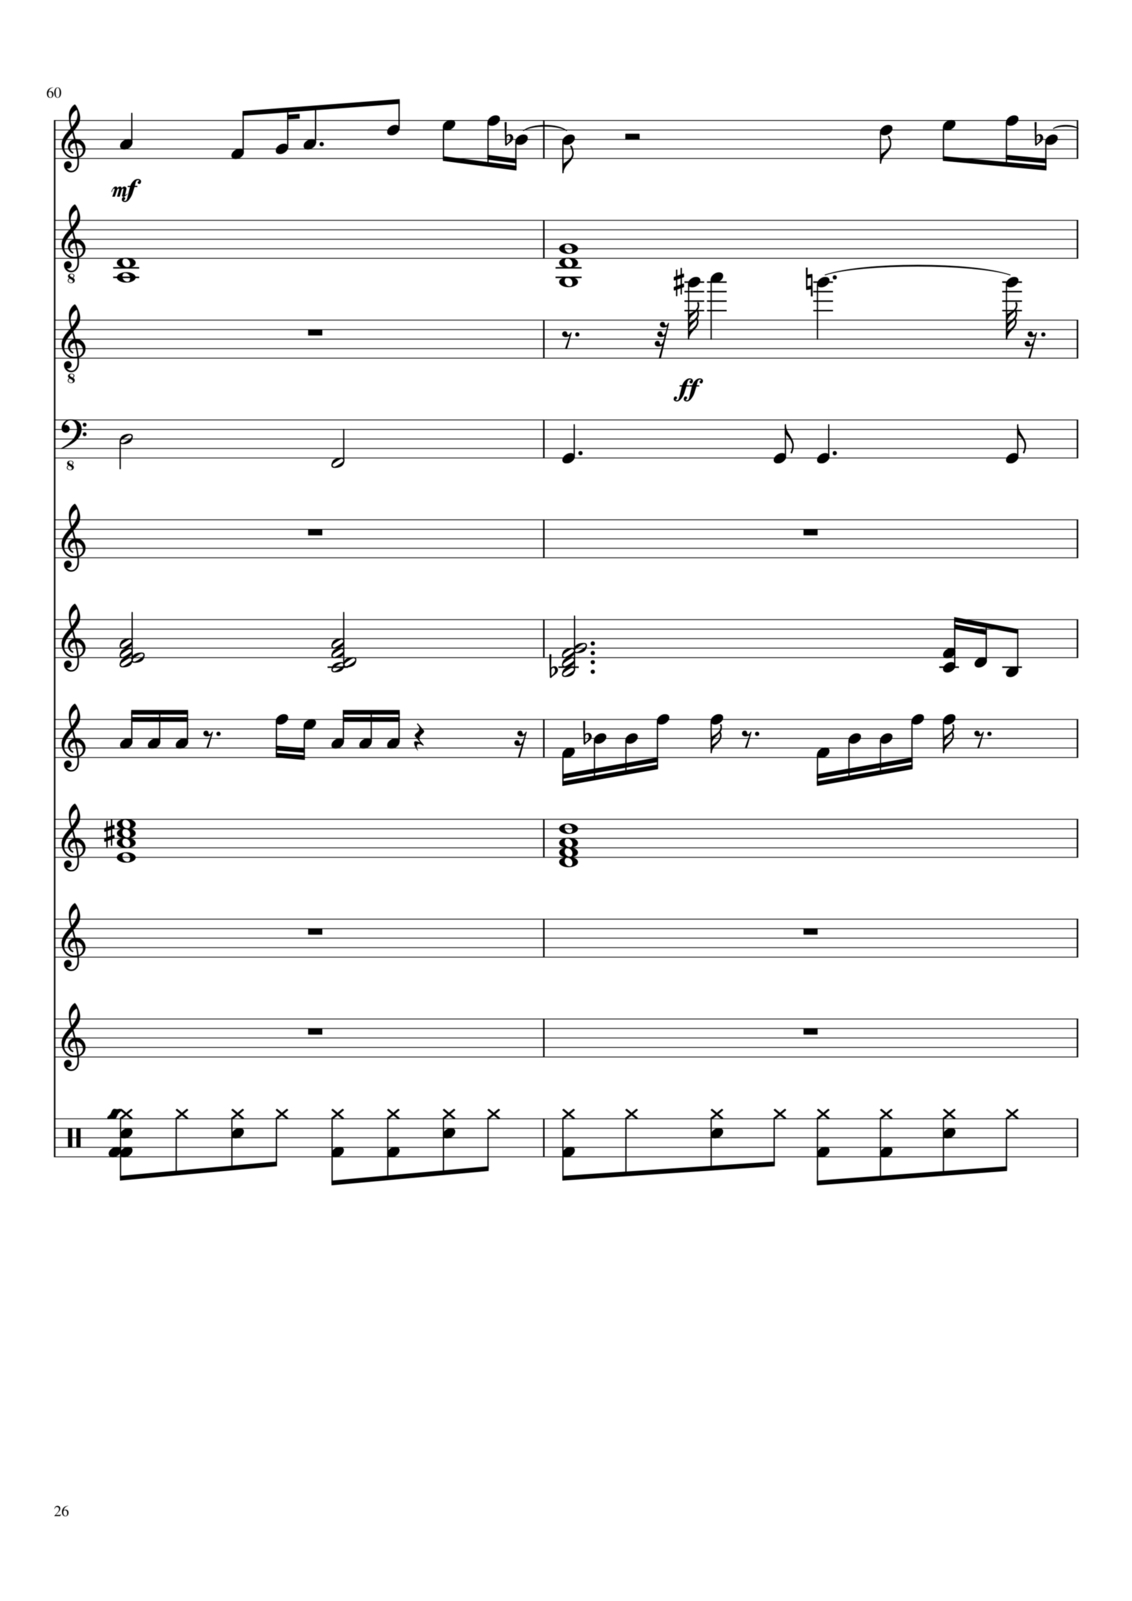 Gorod, kotorogo net slide, Image 26